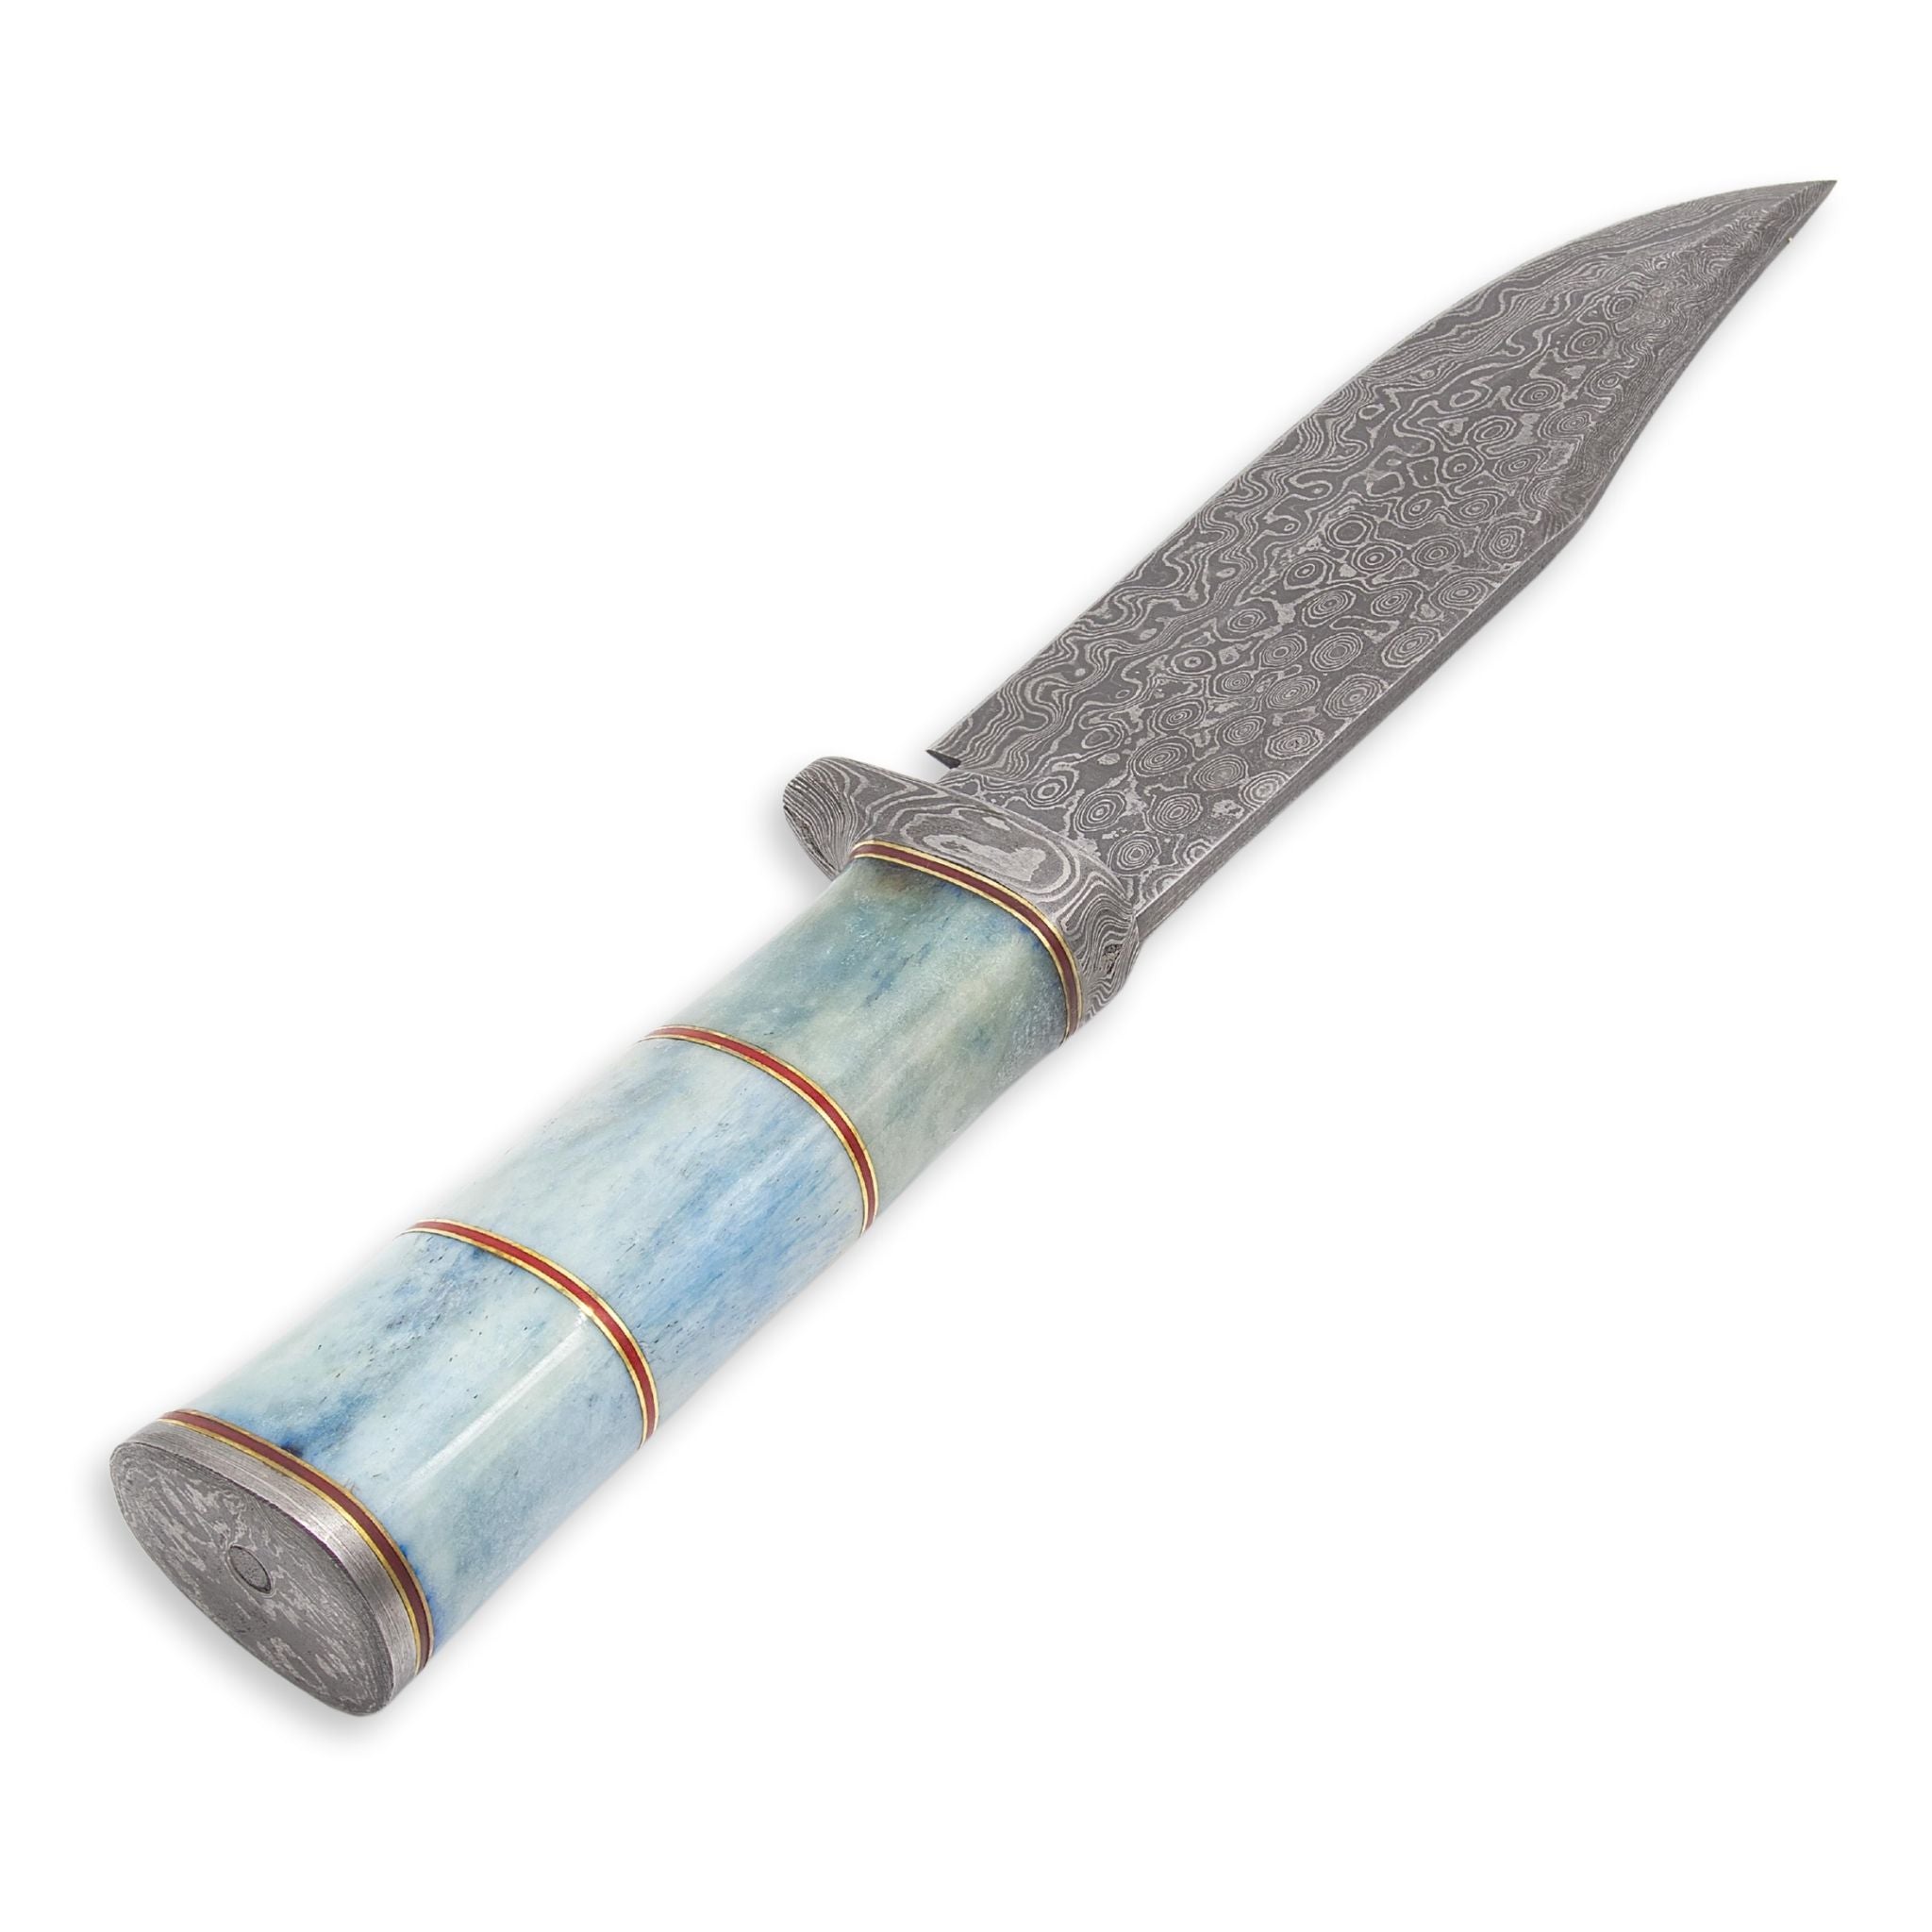 Maven Maxim IV, Damascus Steel, Handmade Hunting Knife